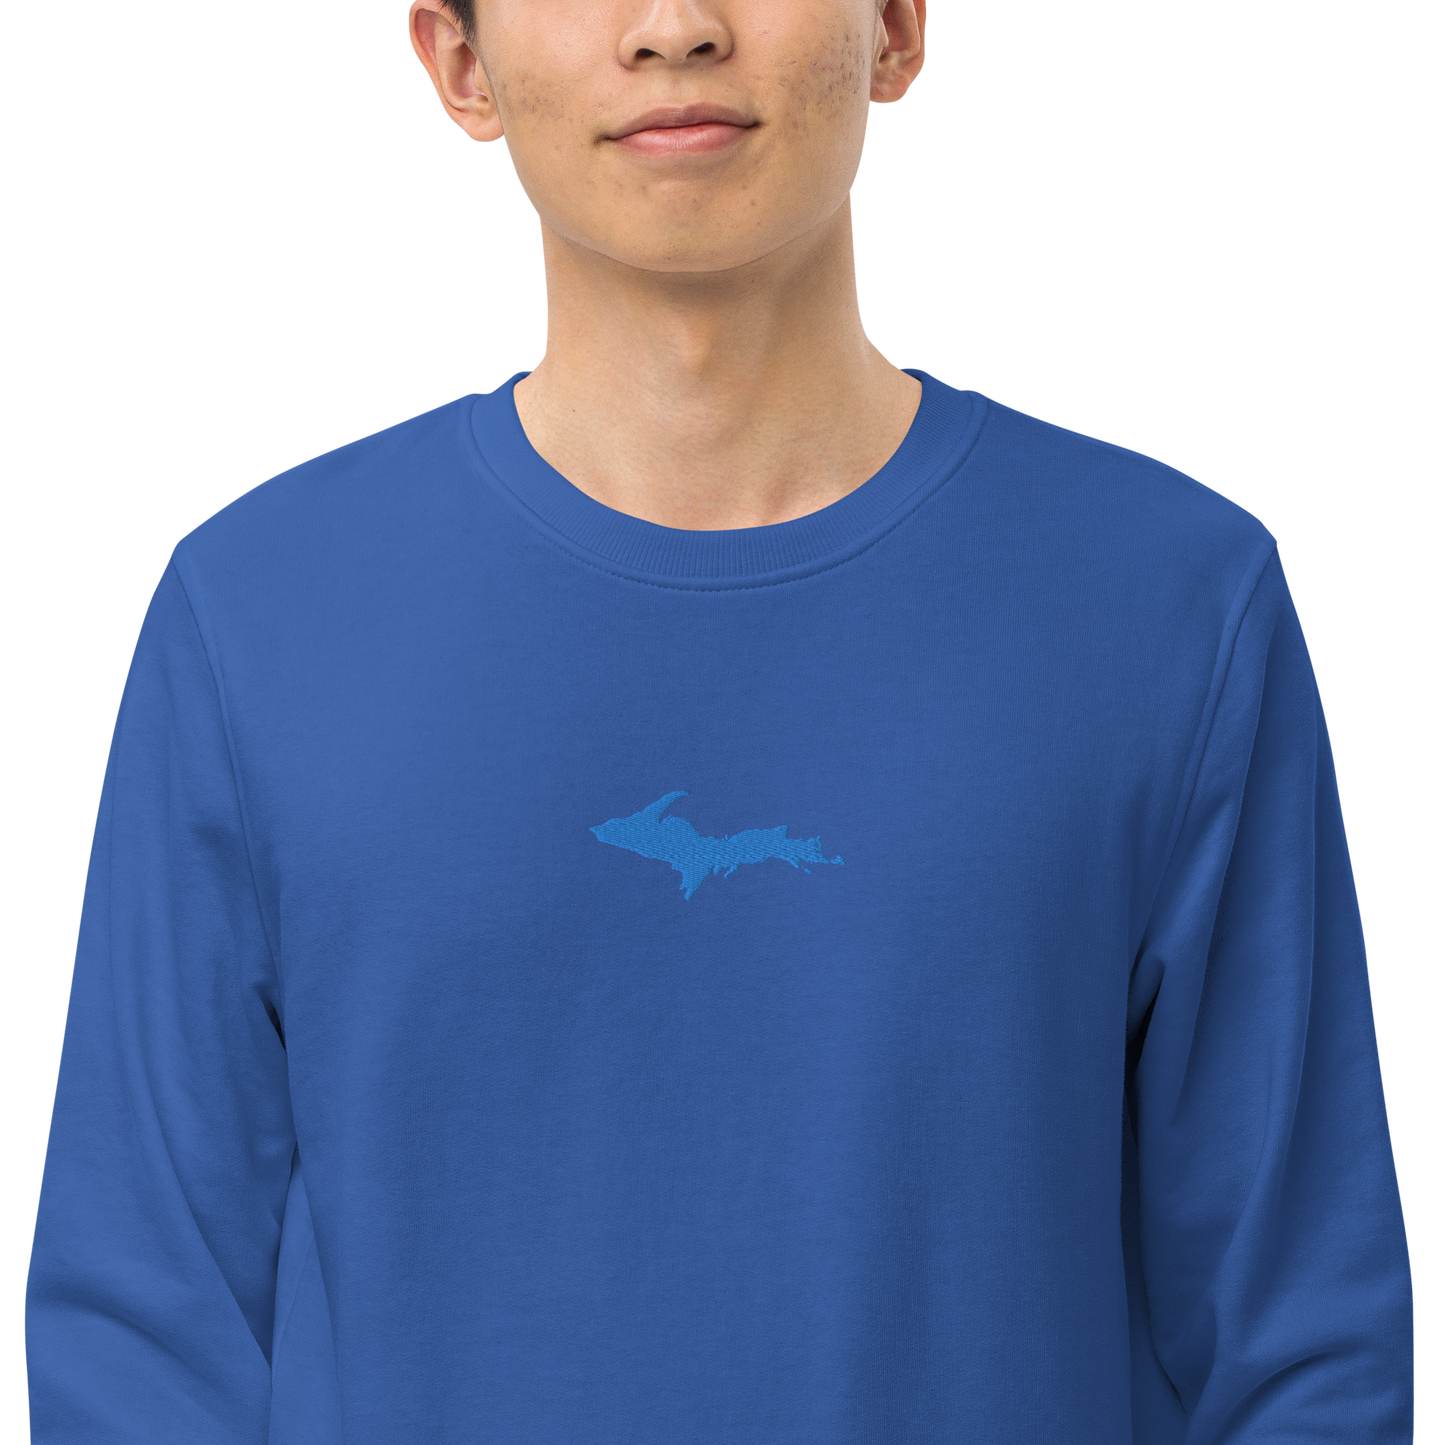 Michigan Upper Peninsula Sweatshirt (w/ Embroidered Azure UP Outline) | Unisex Organic